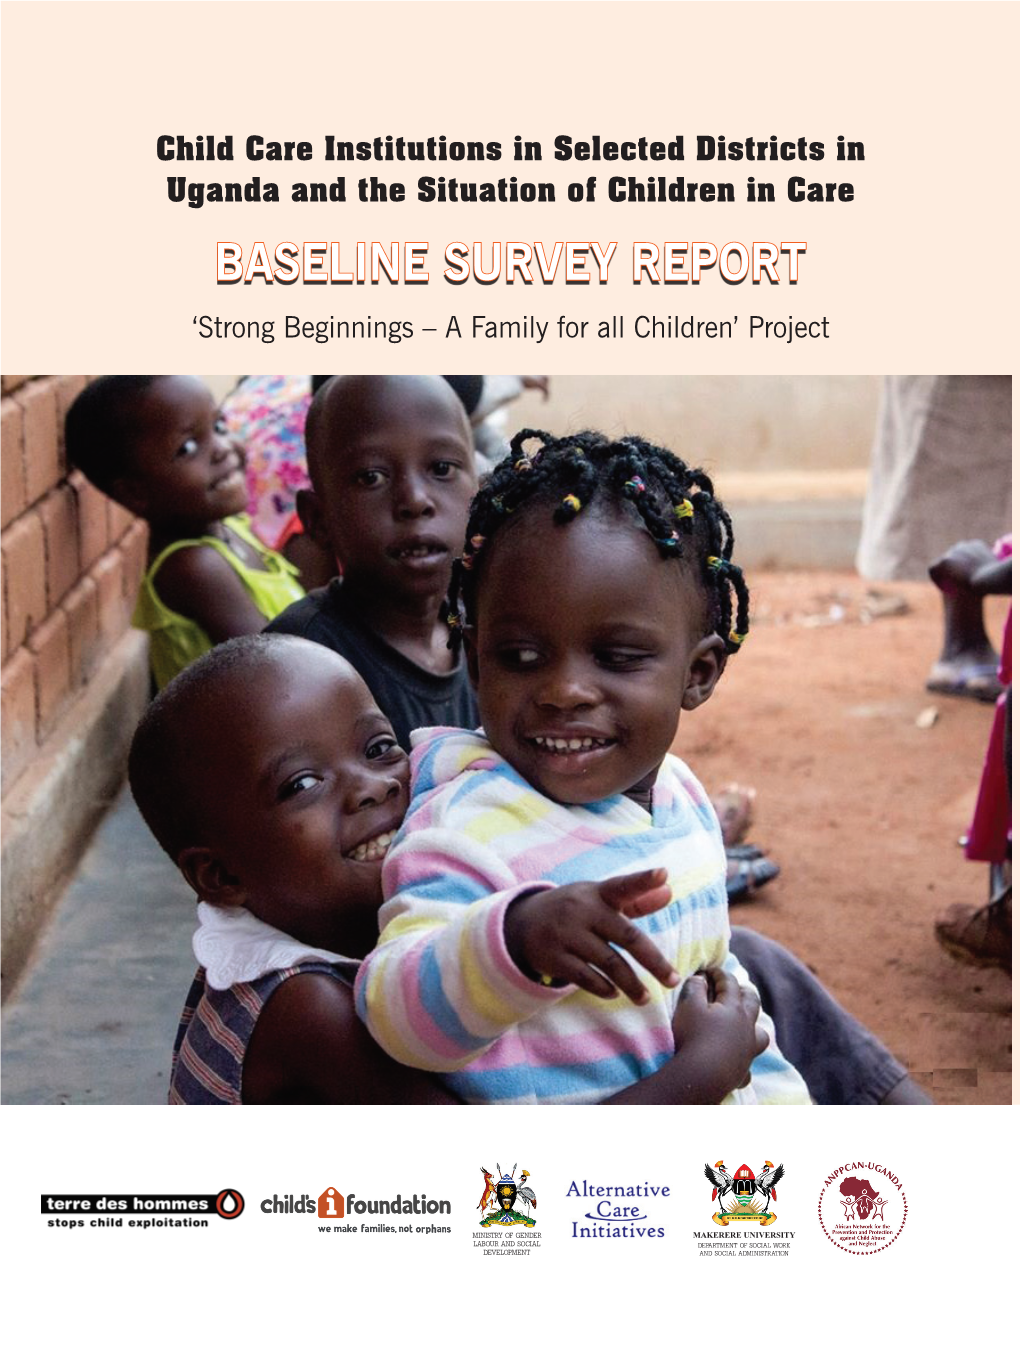 3.3 Admission of Children Into Child Care Institutions